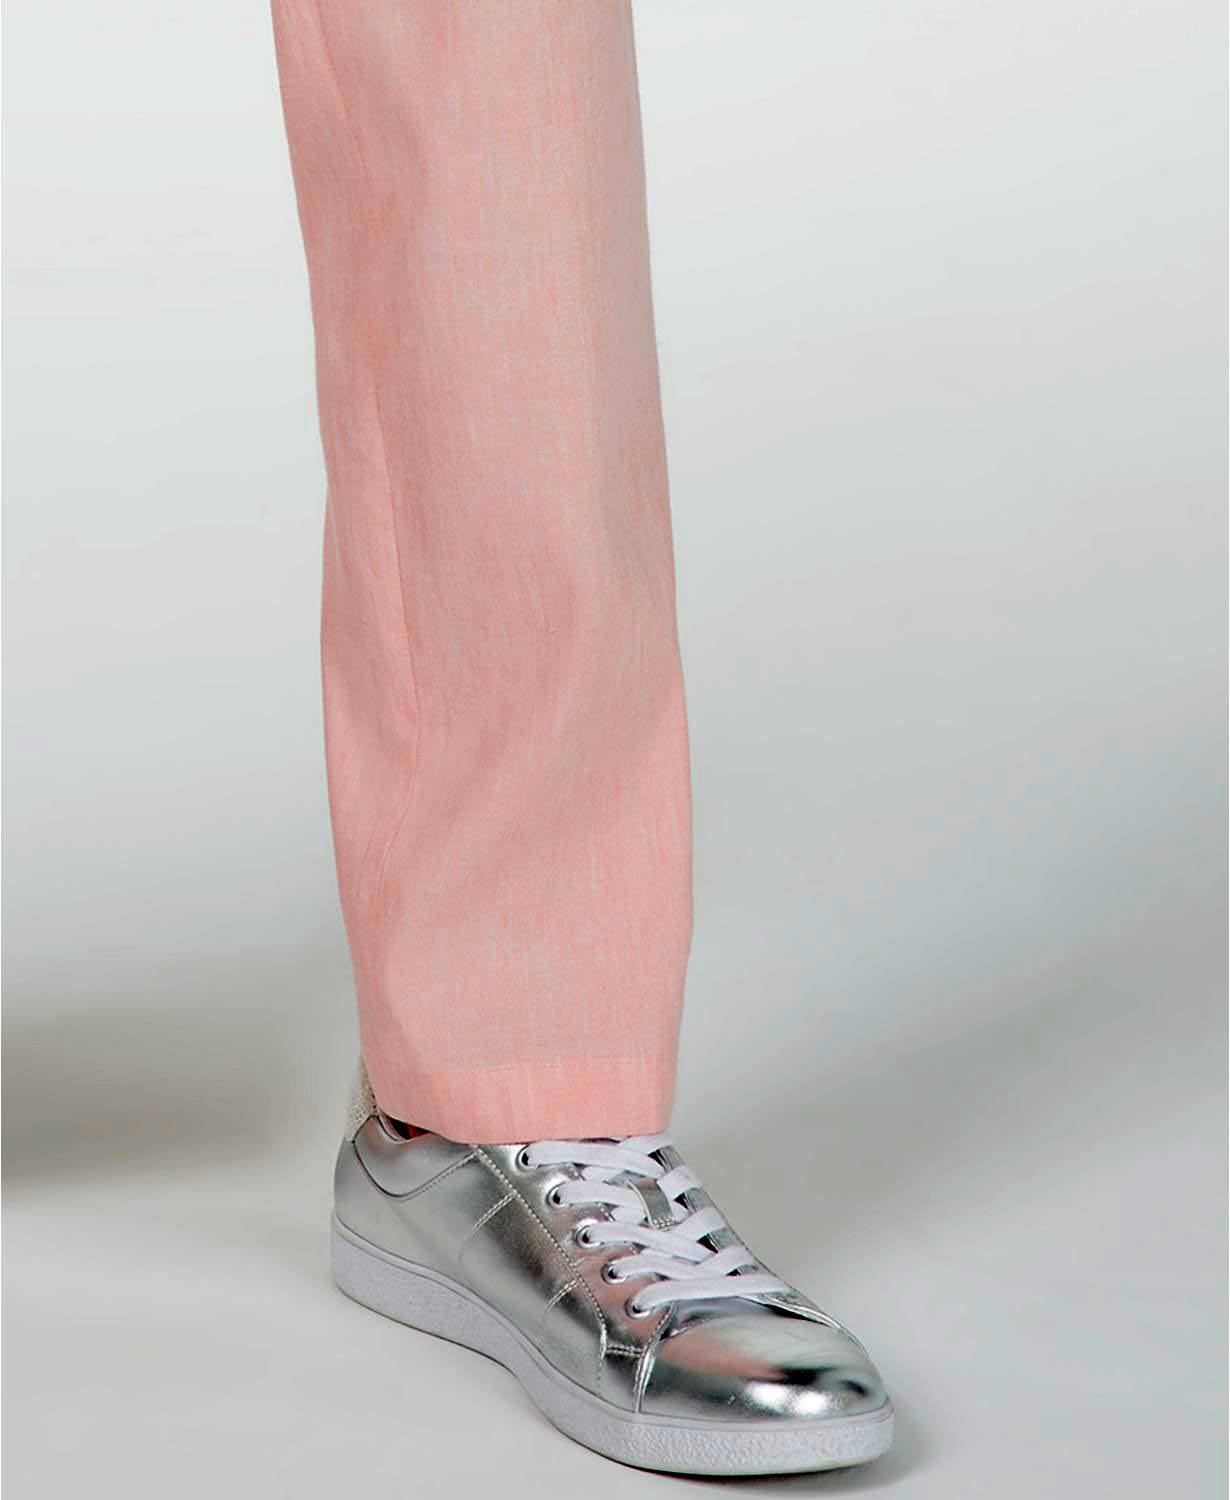 Inc International Concepts Slim Fit Stretch Linen Pants / Coral Combo